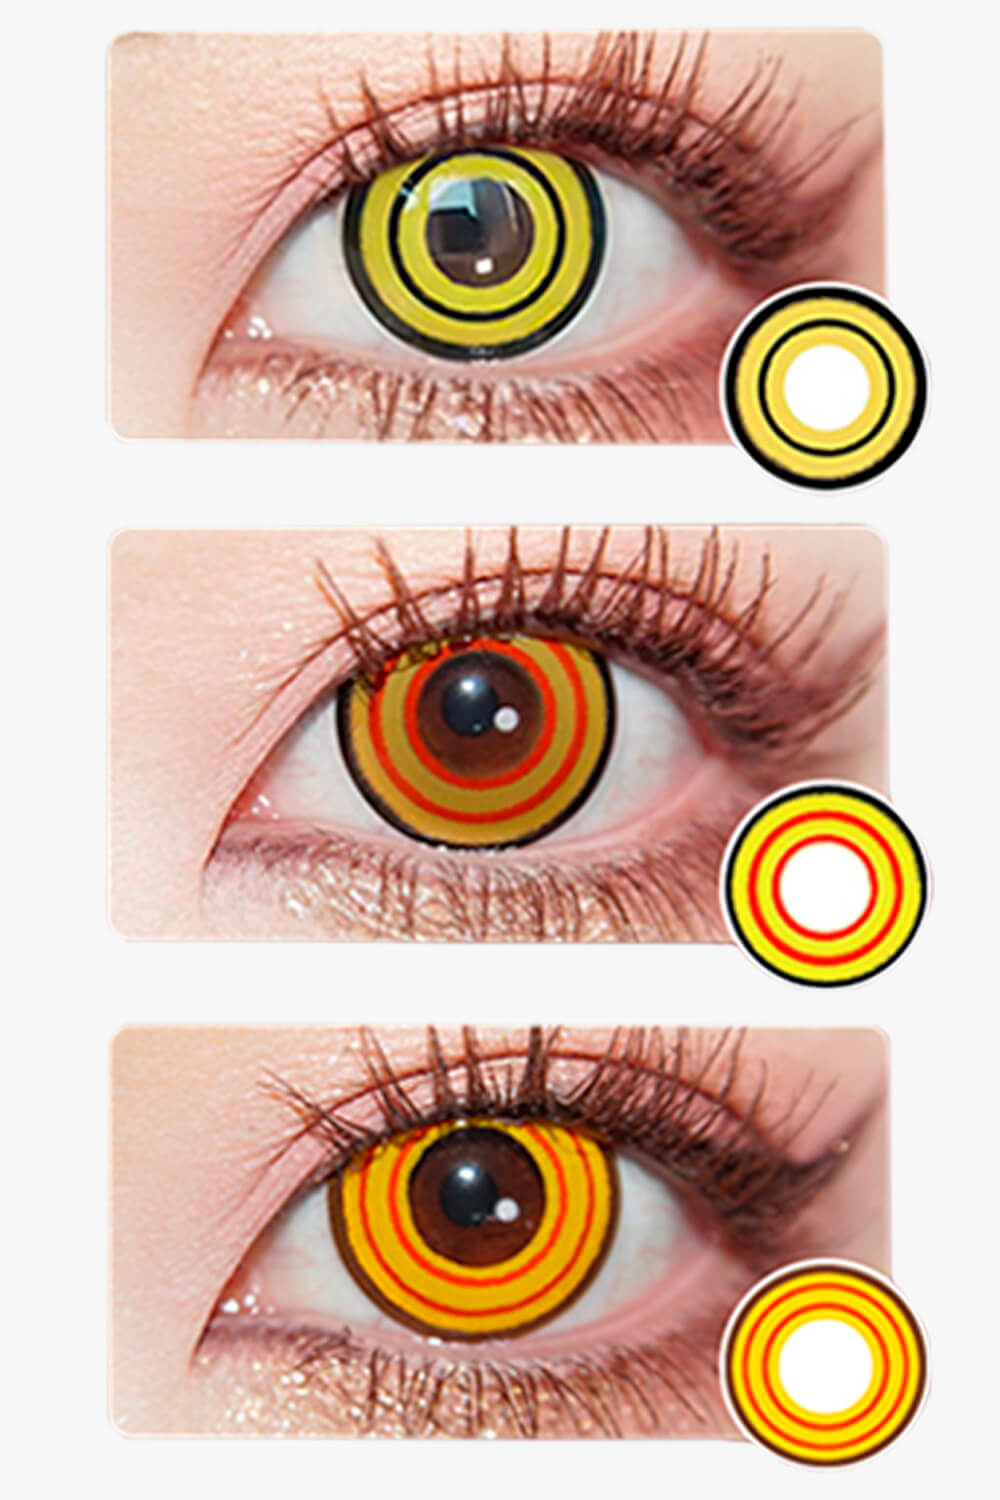 Makima Contact Lenses Chainsaw Man Cosplay 3 variants Yellow, Golden, Orange